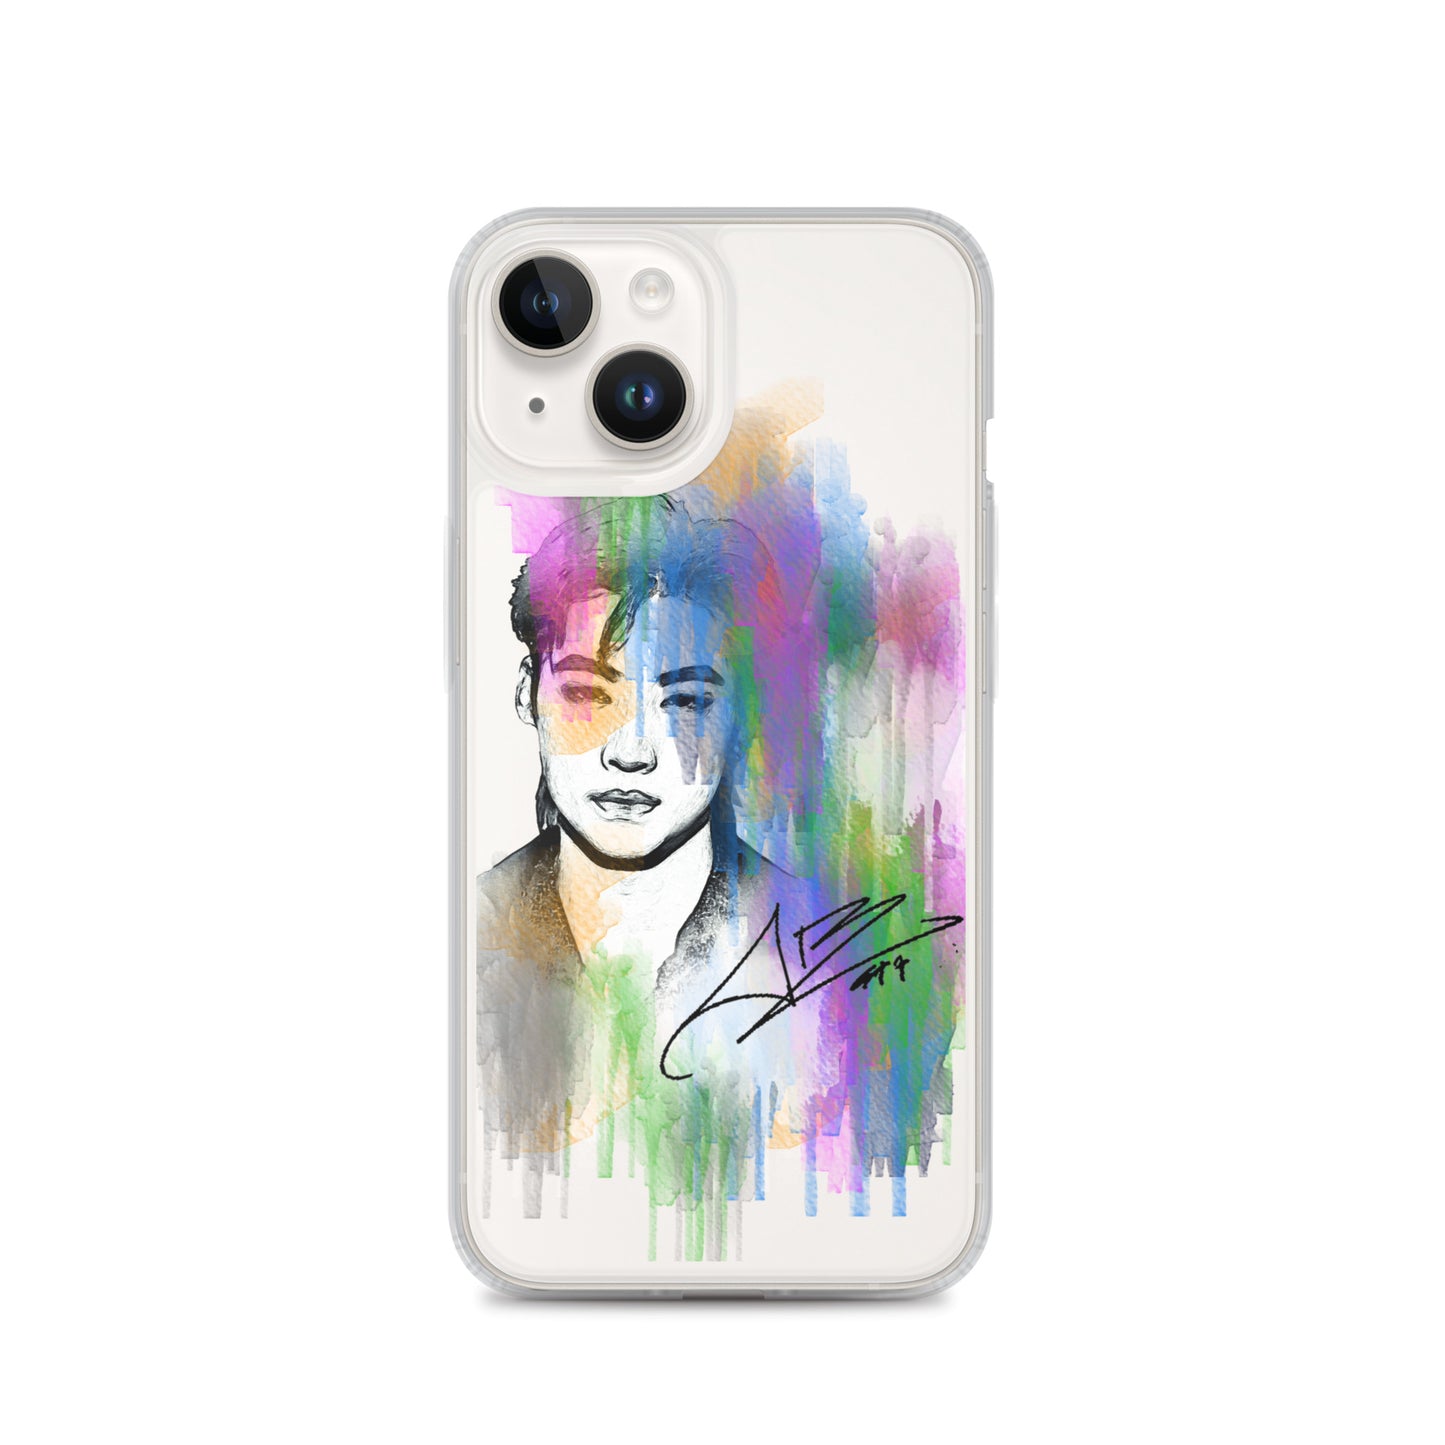 GOT7 JB, Lim Jae-beom Waterpaint Portrait iPhone Case